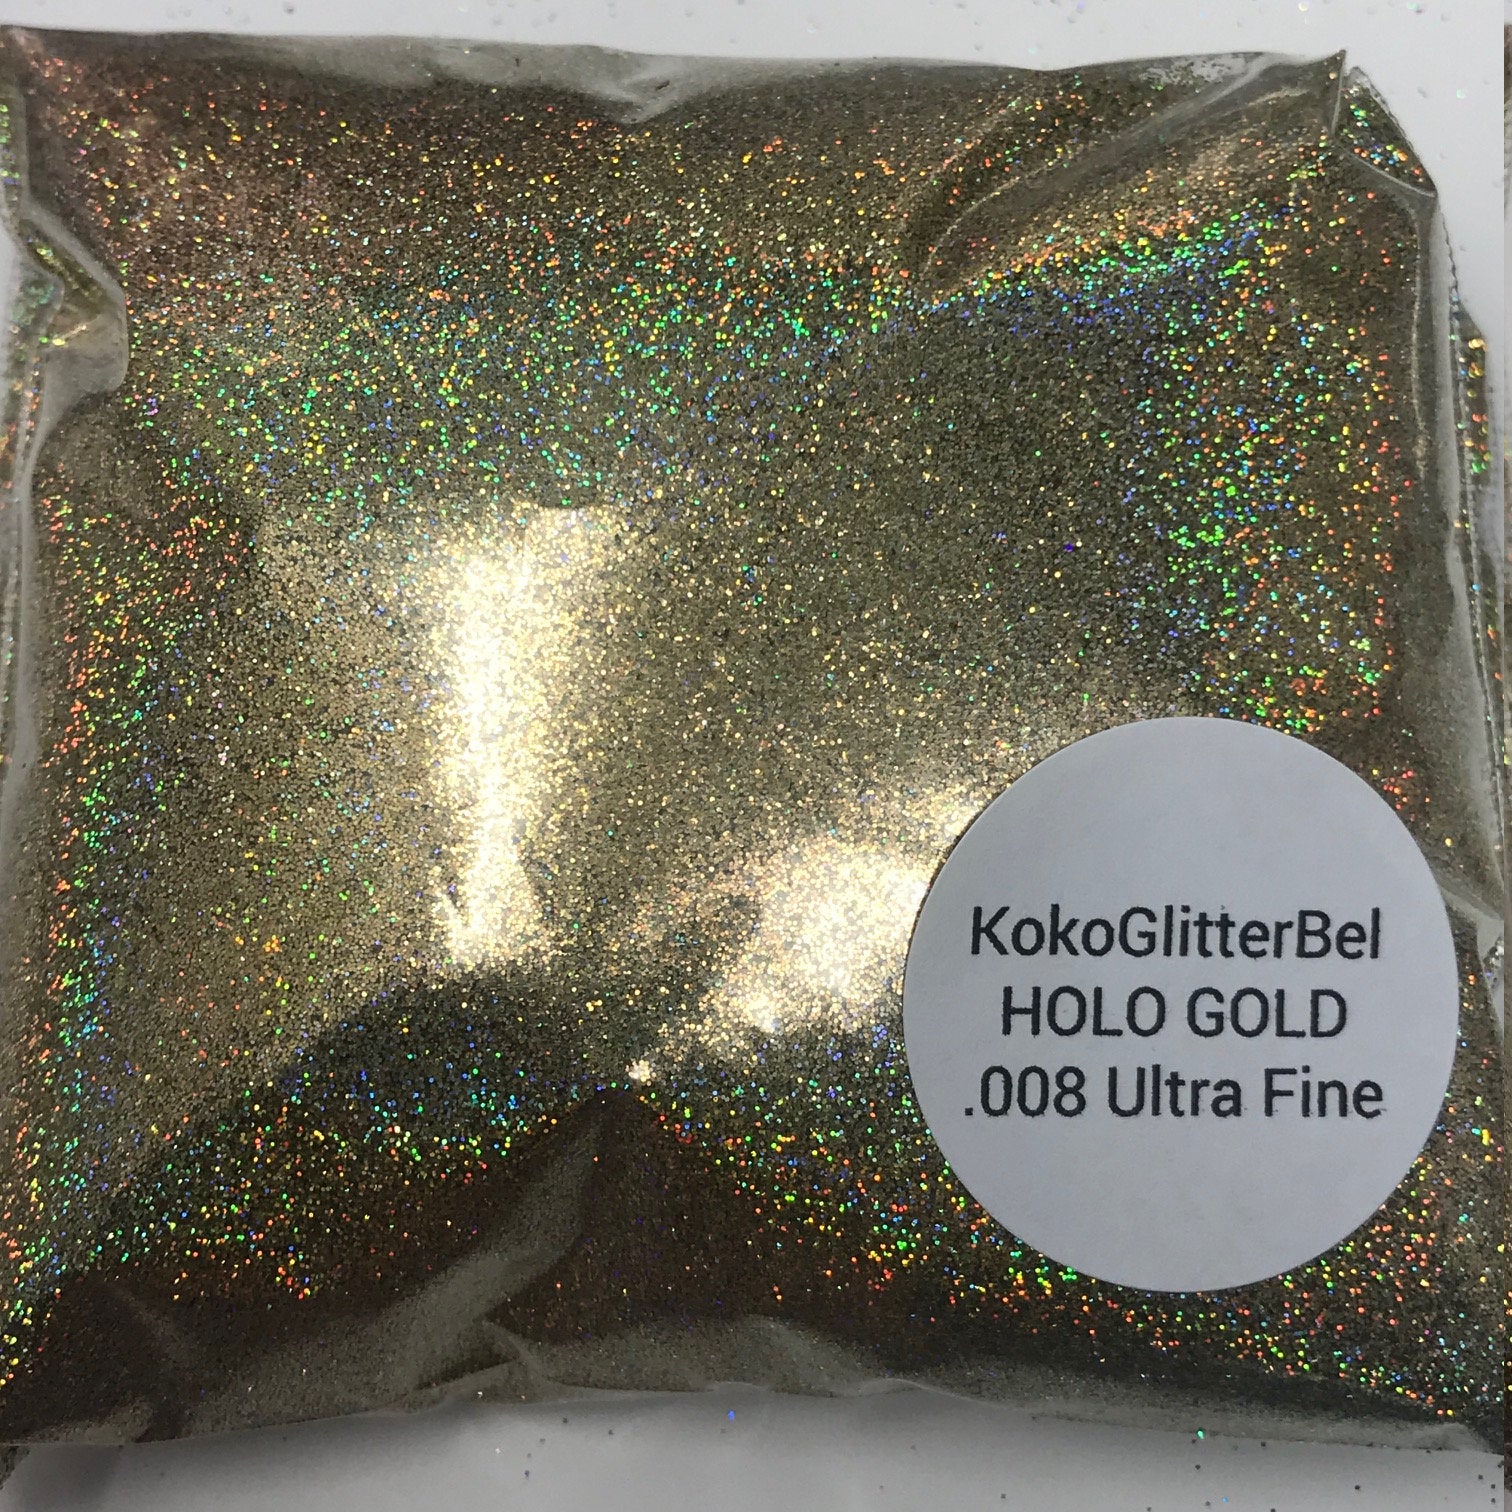 Creatistics Bulk Glitter – Gold 1kg Tub - MTA Catalogue